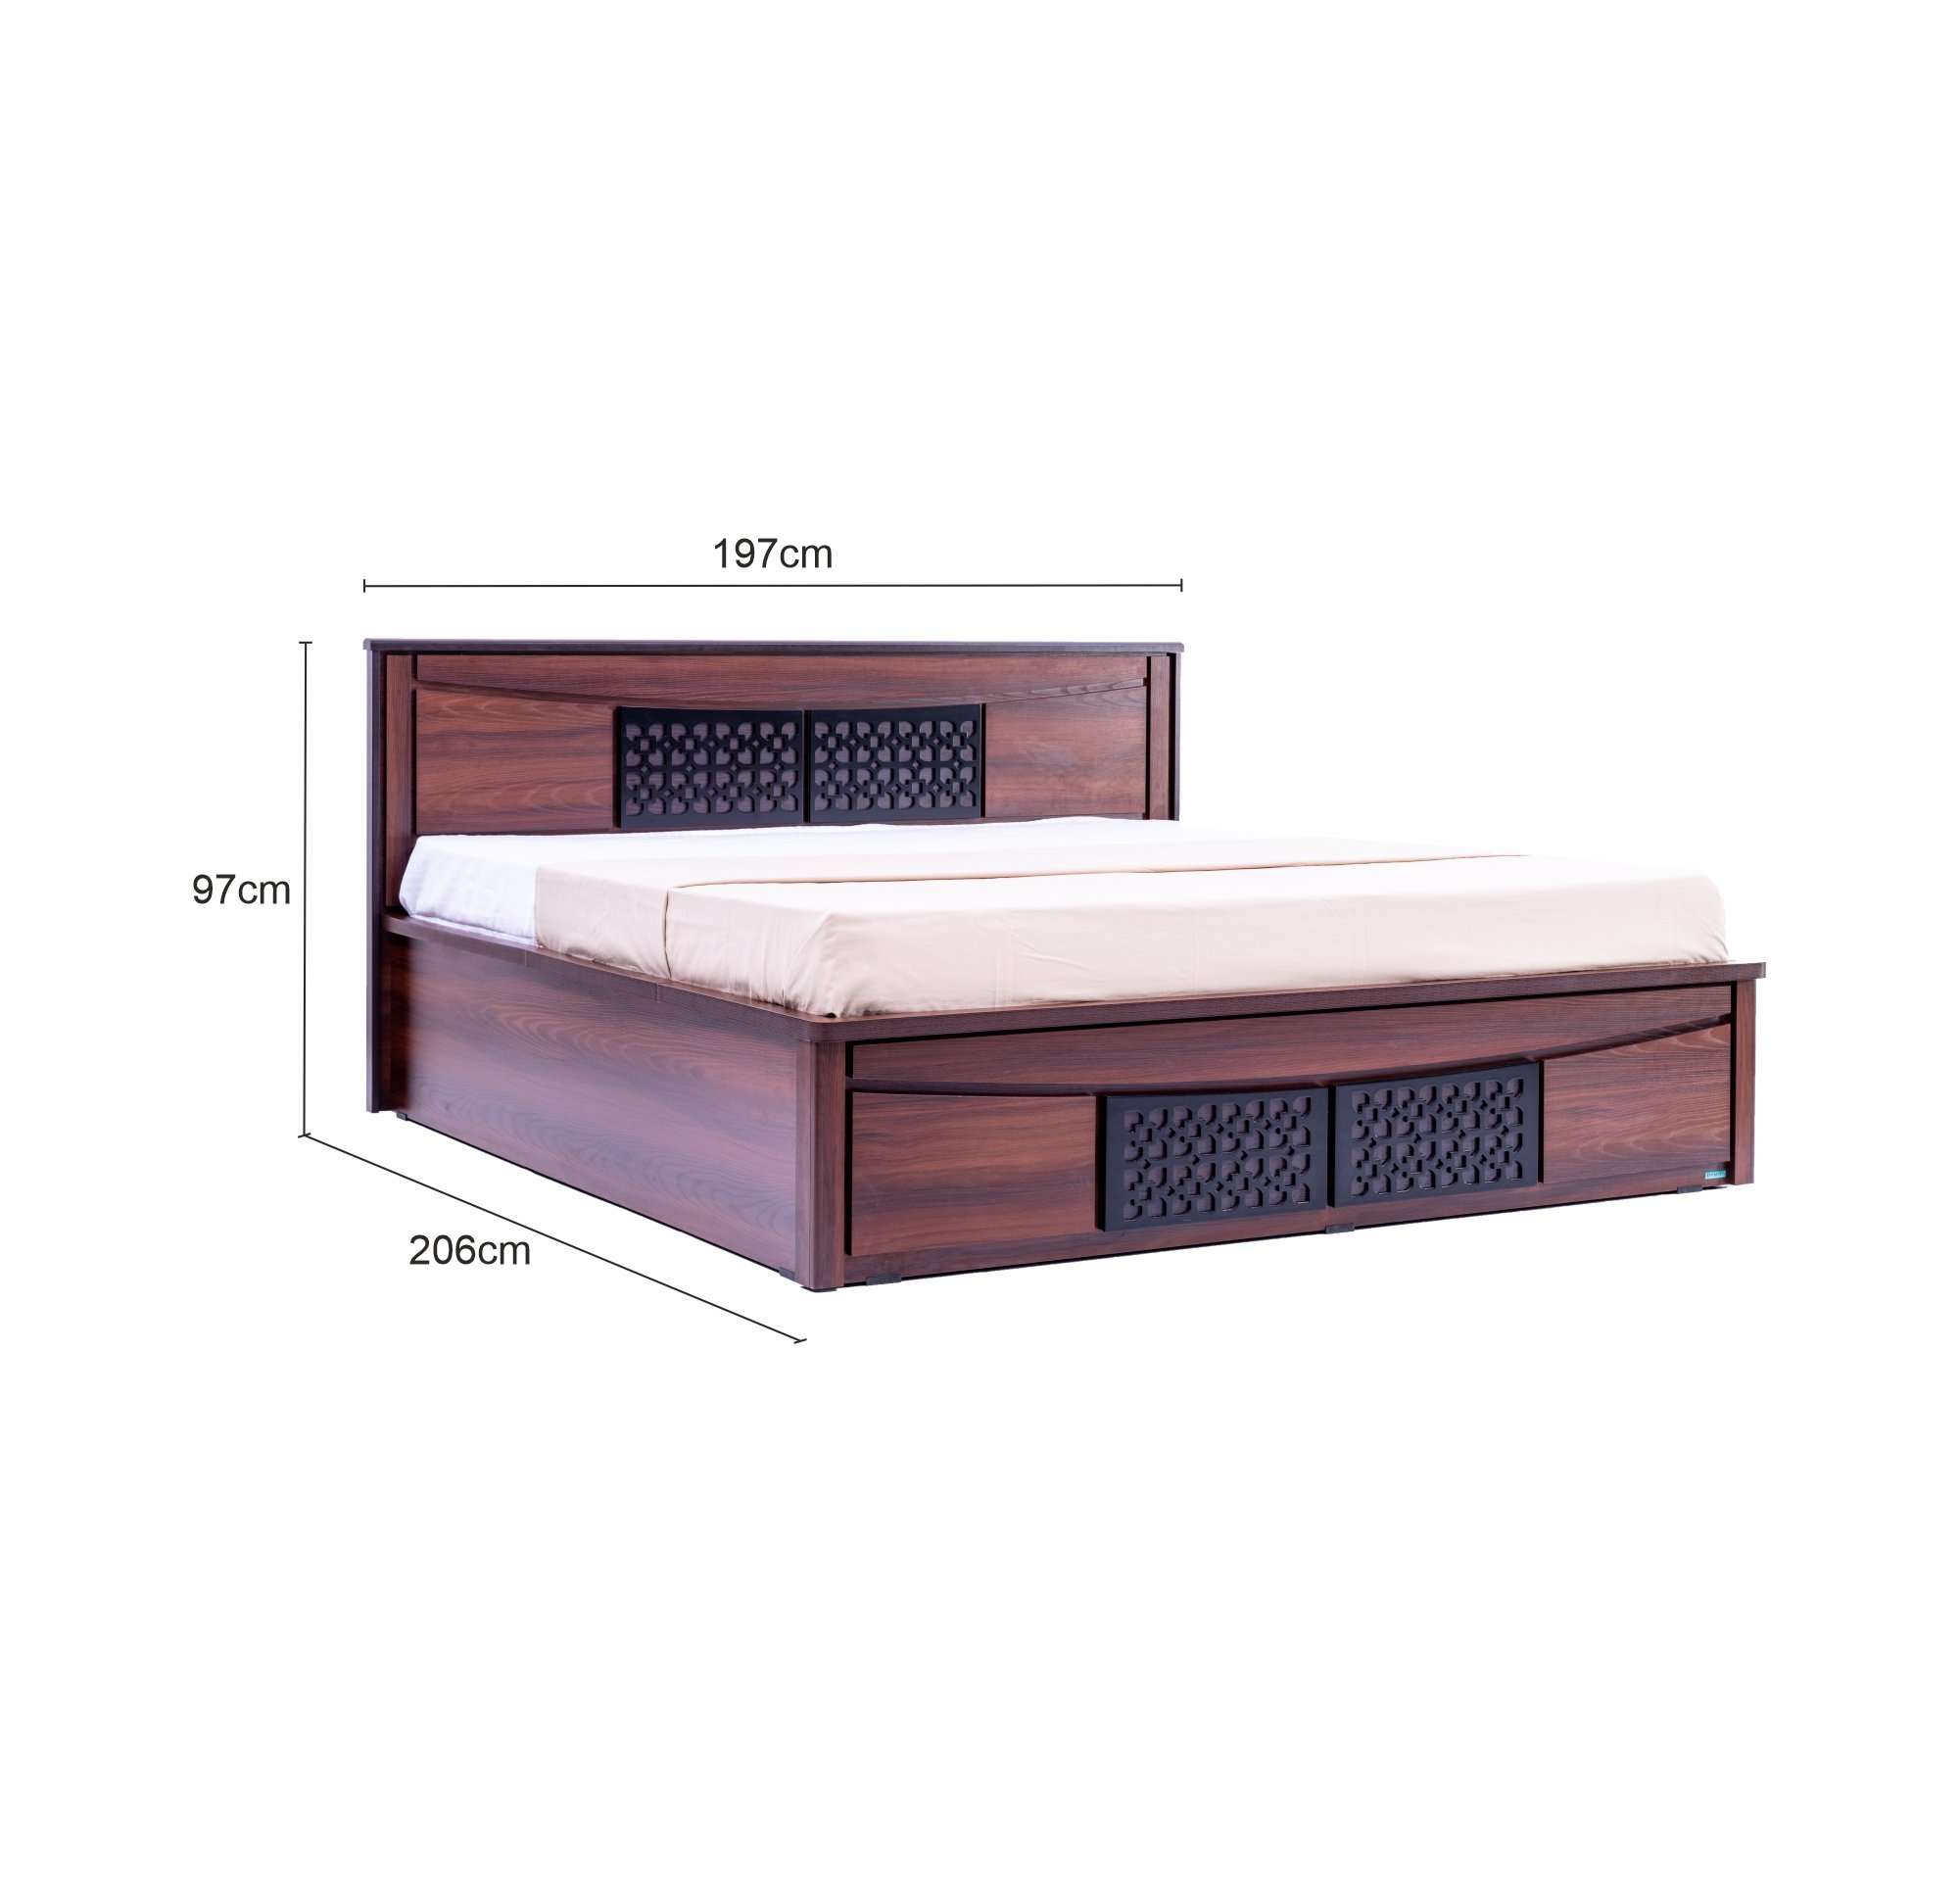 KBCA008-KD Bed Carvin Storage-WGM02